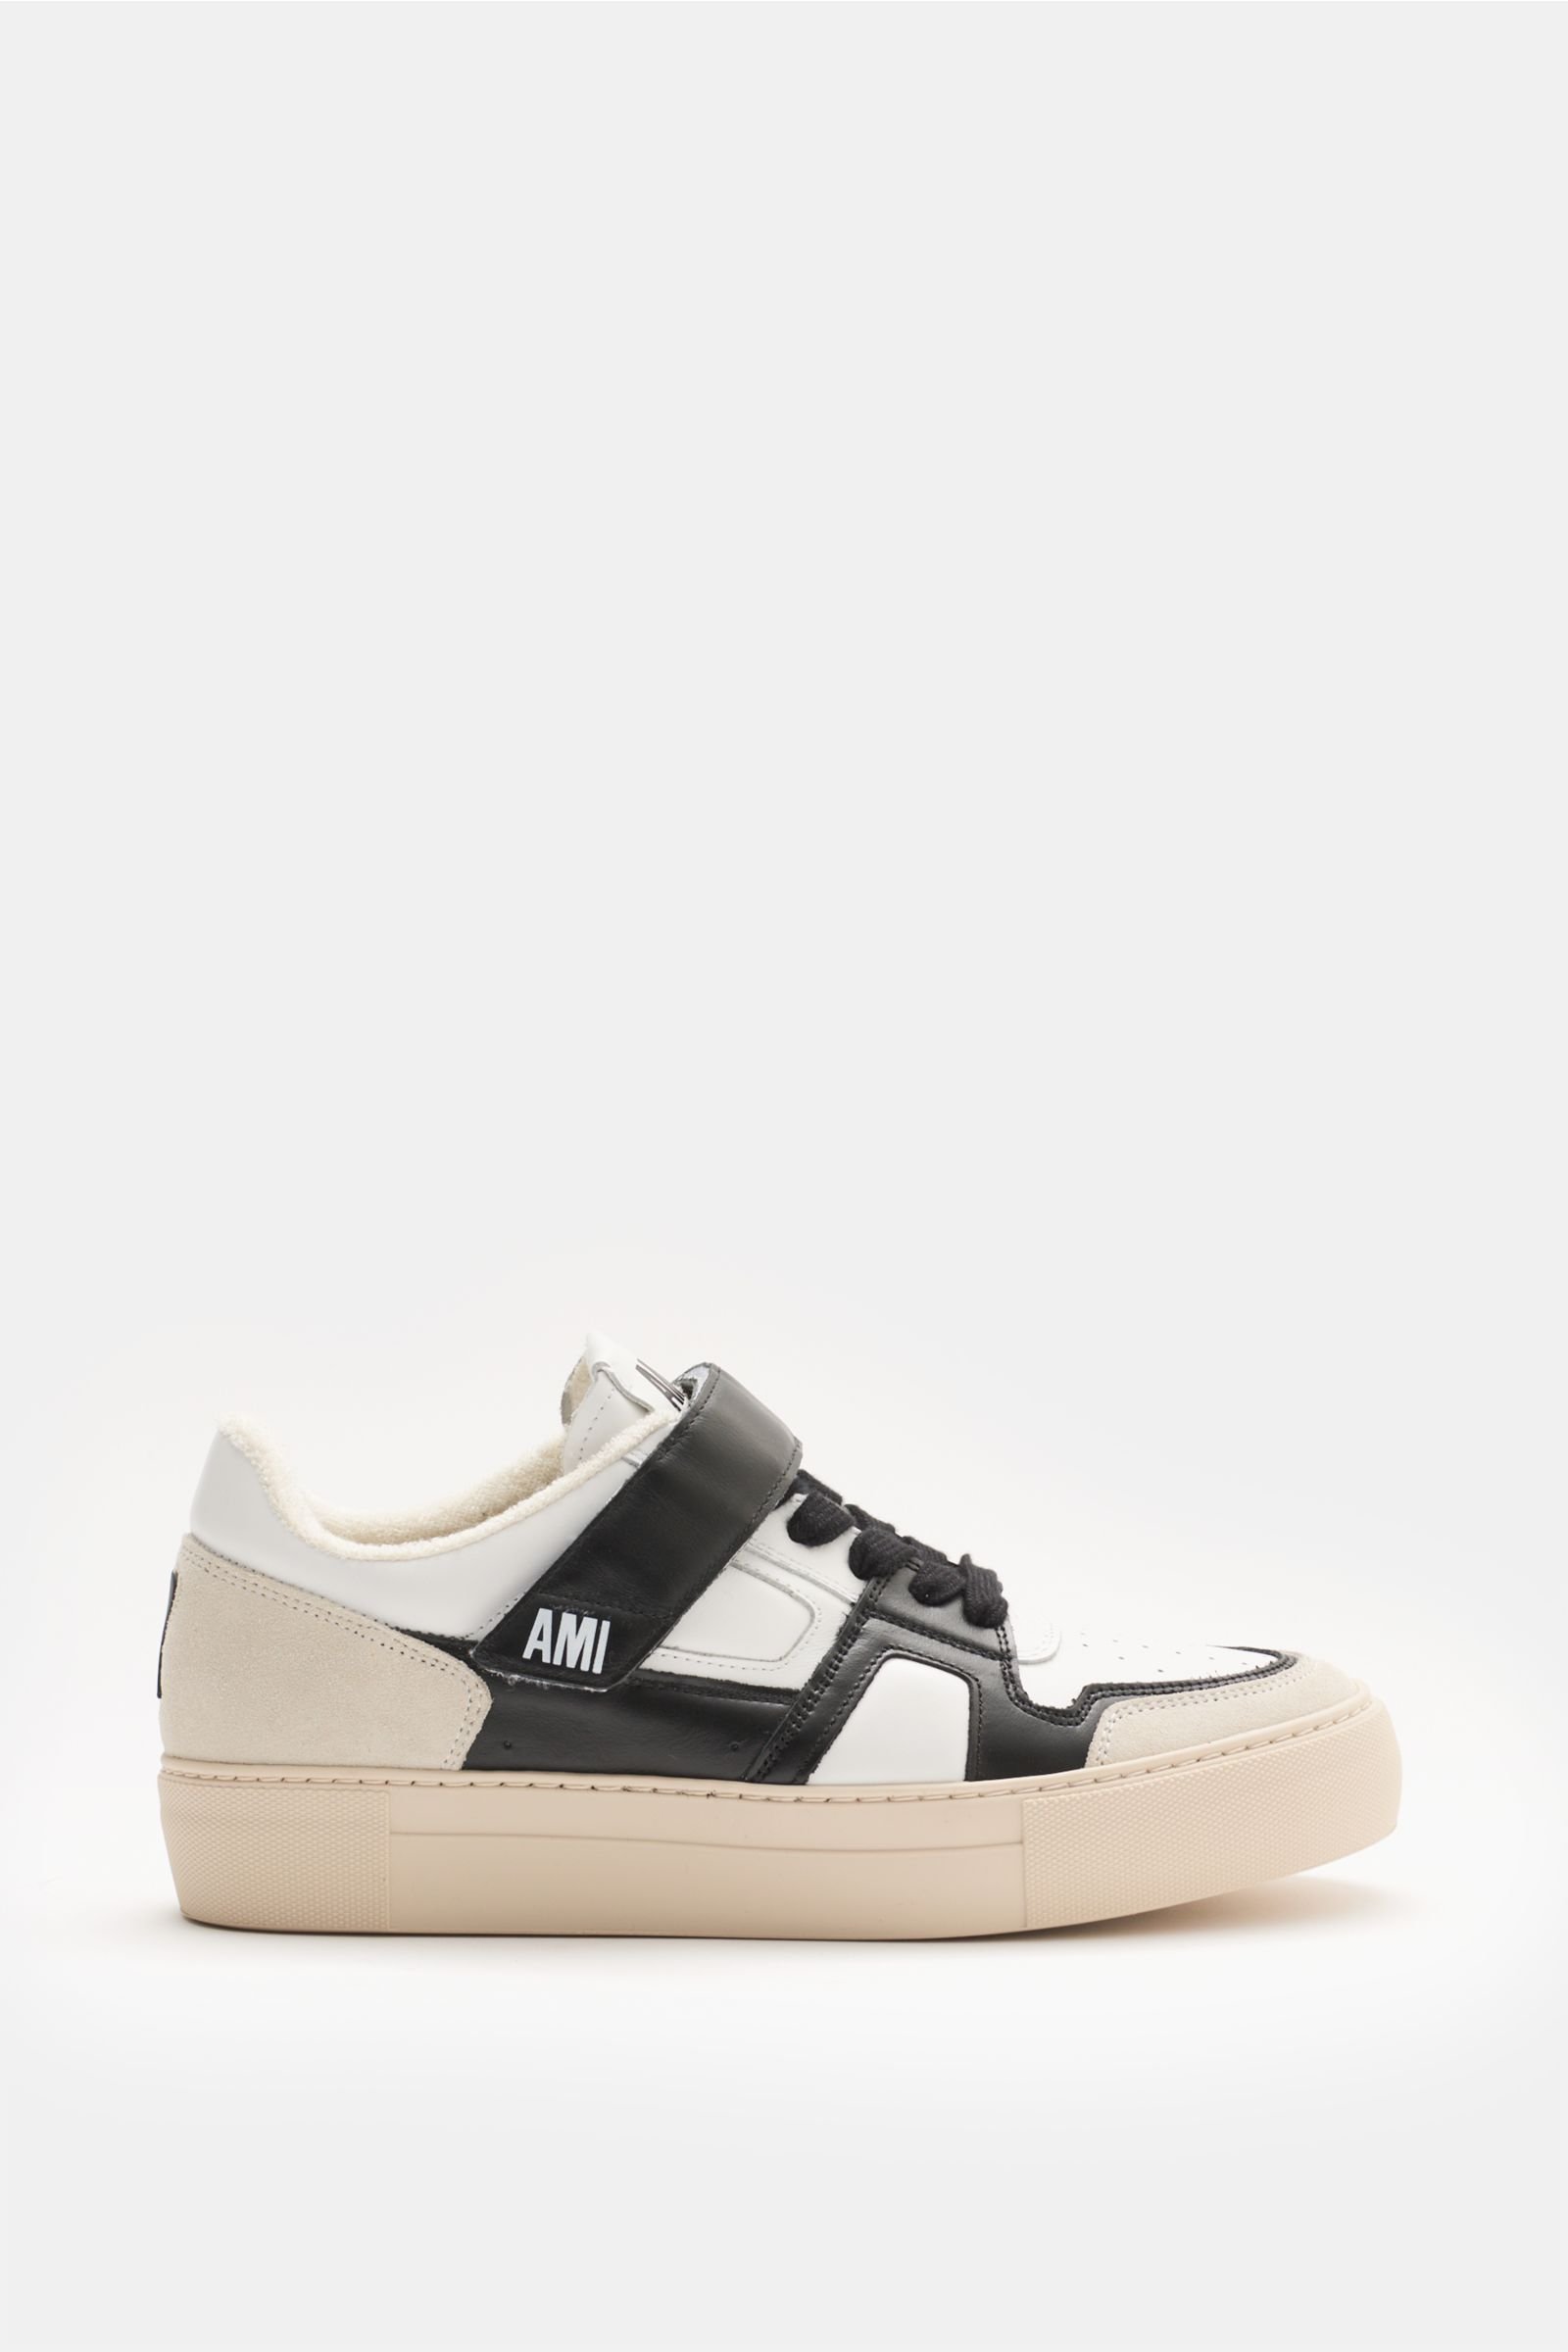 Sneakers white/black/cream